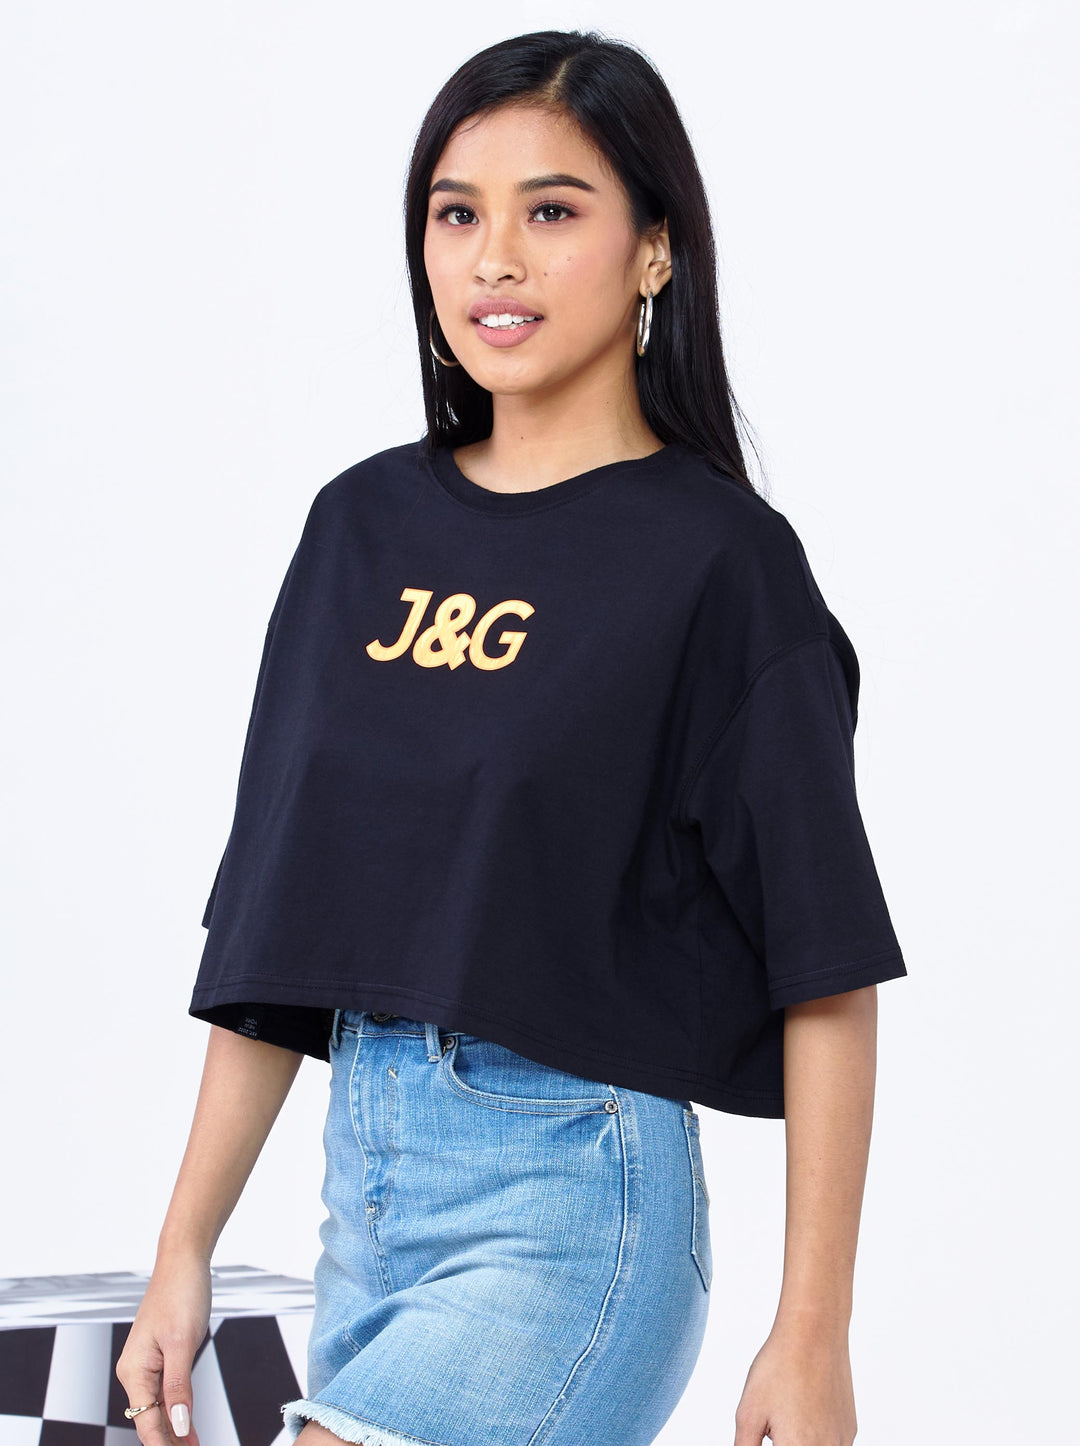 J&G Graphic Logo Tee